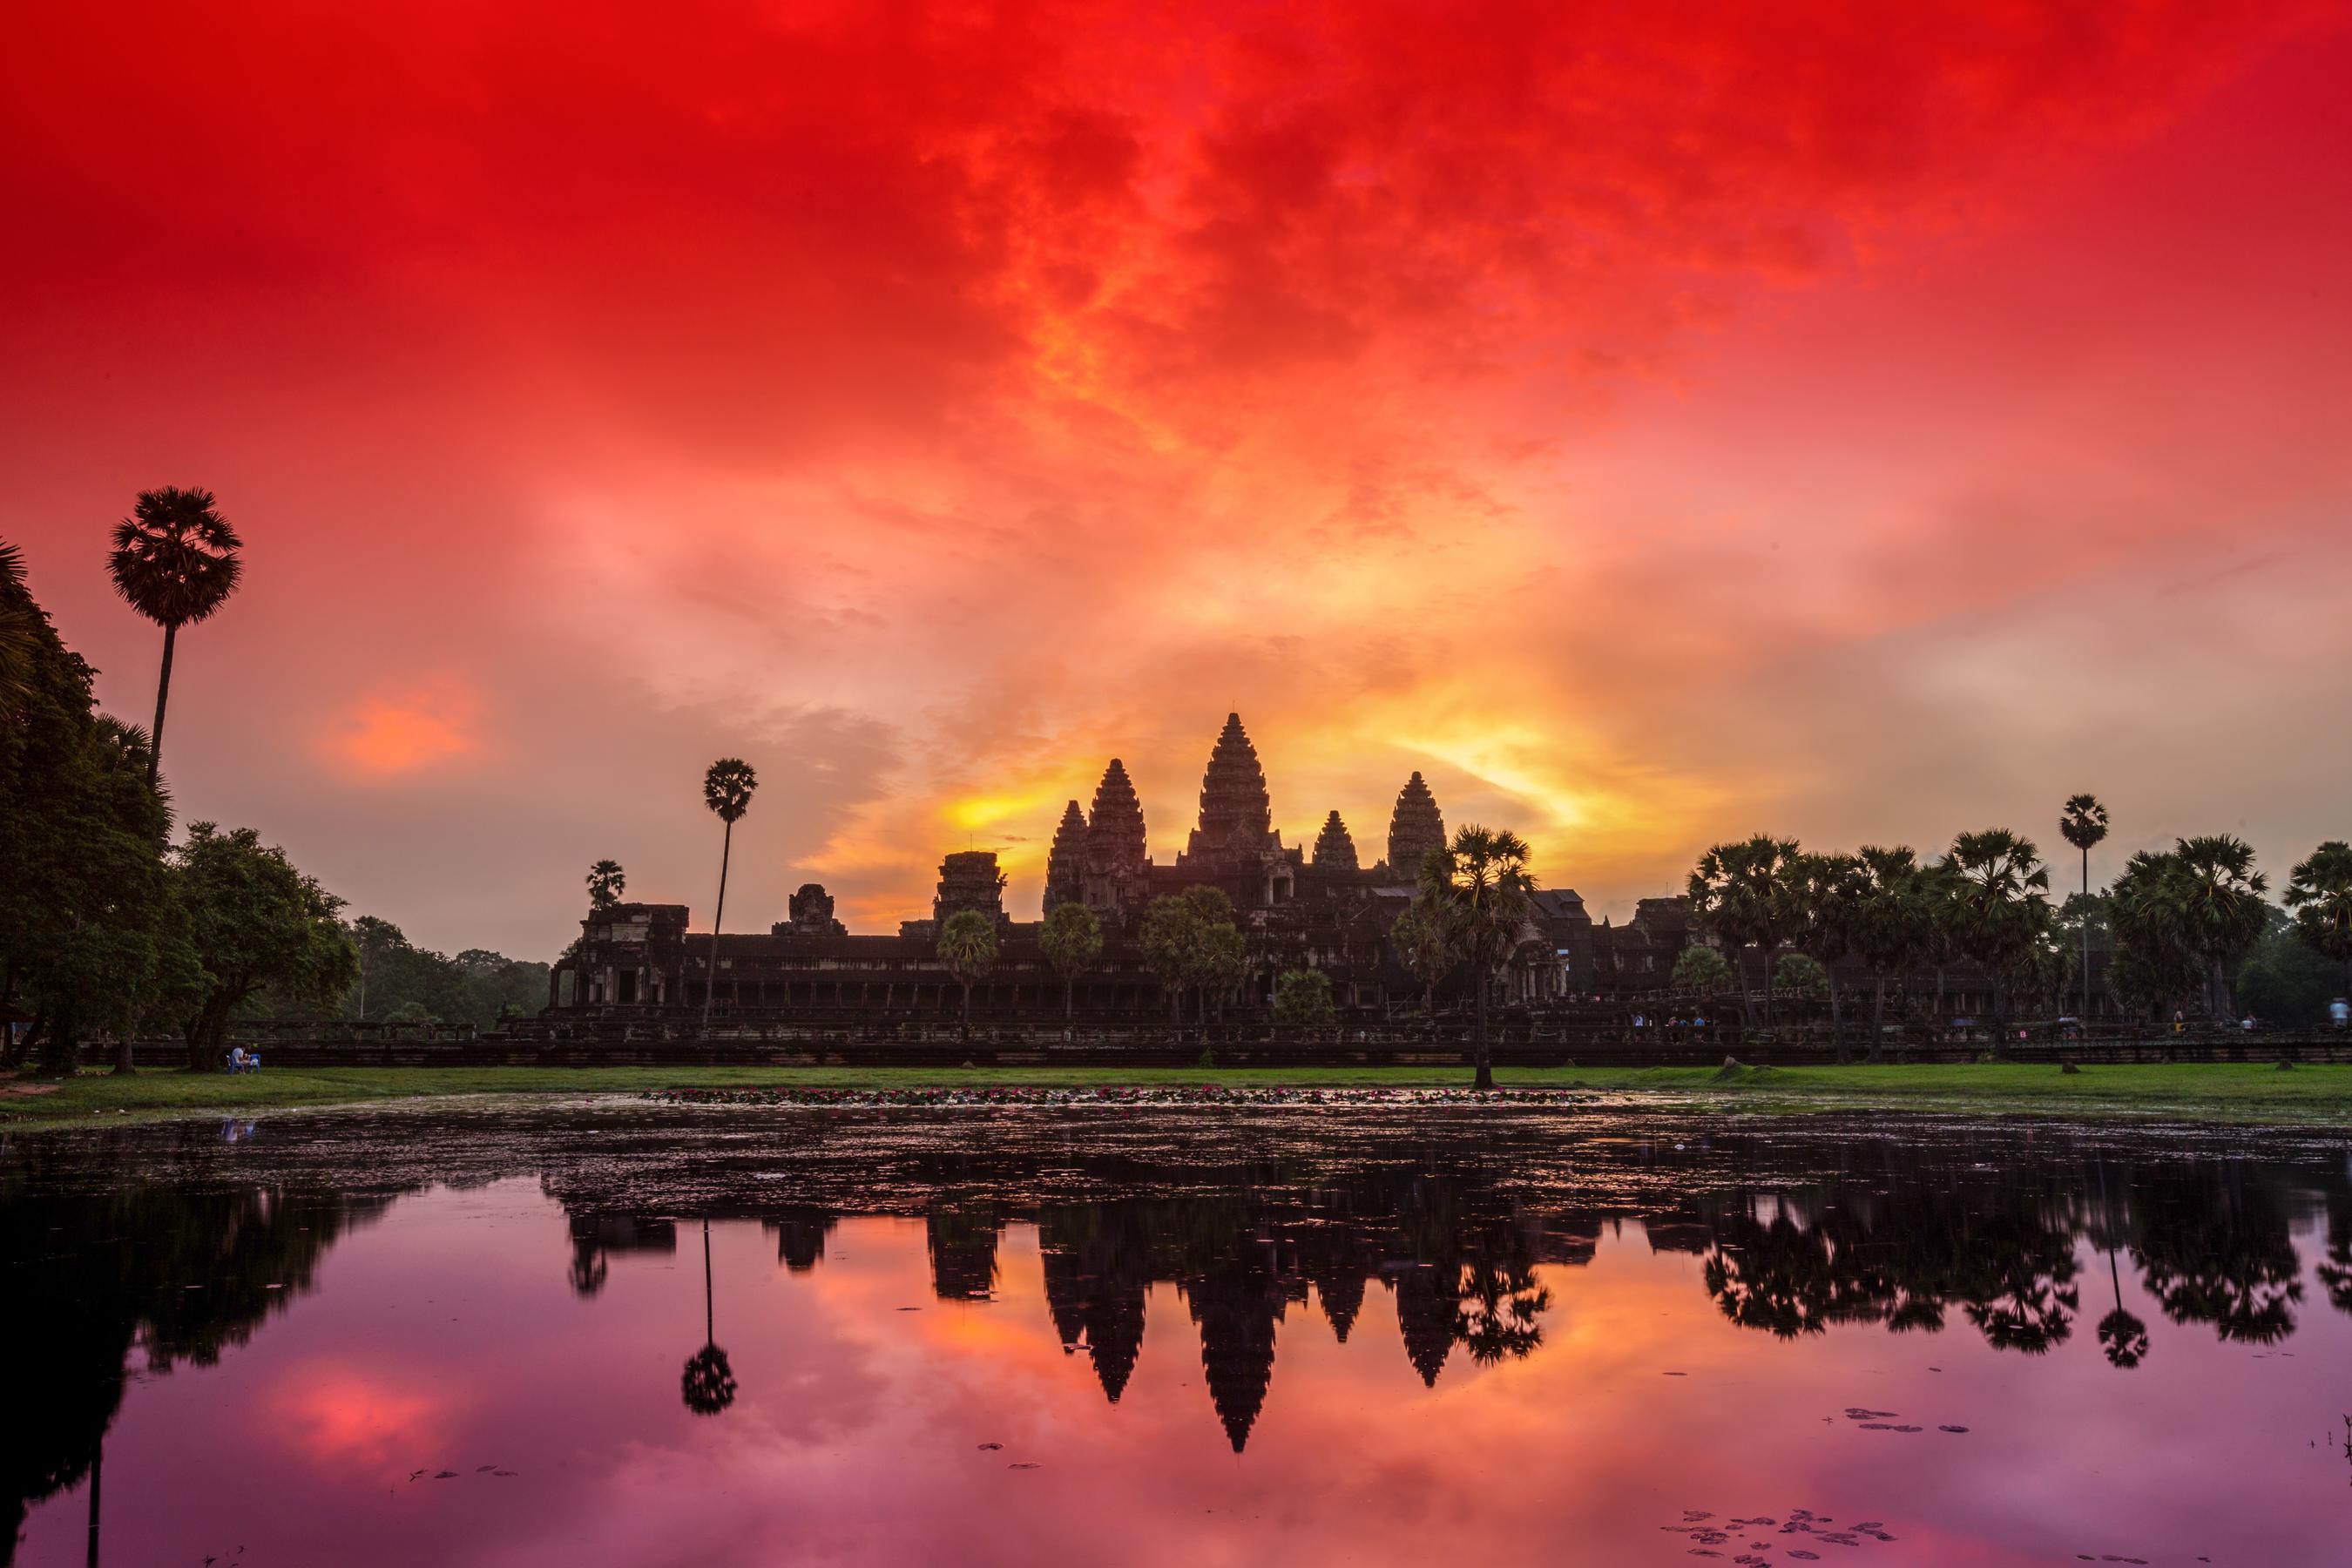 Sunset/ Sunrise at Angkor Wat - Things to do in Vietnam Cambodia Laos 3 week itinerary